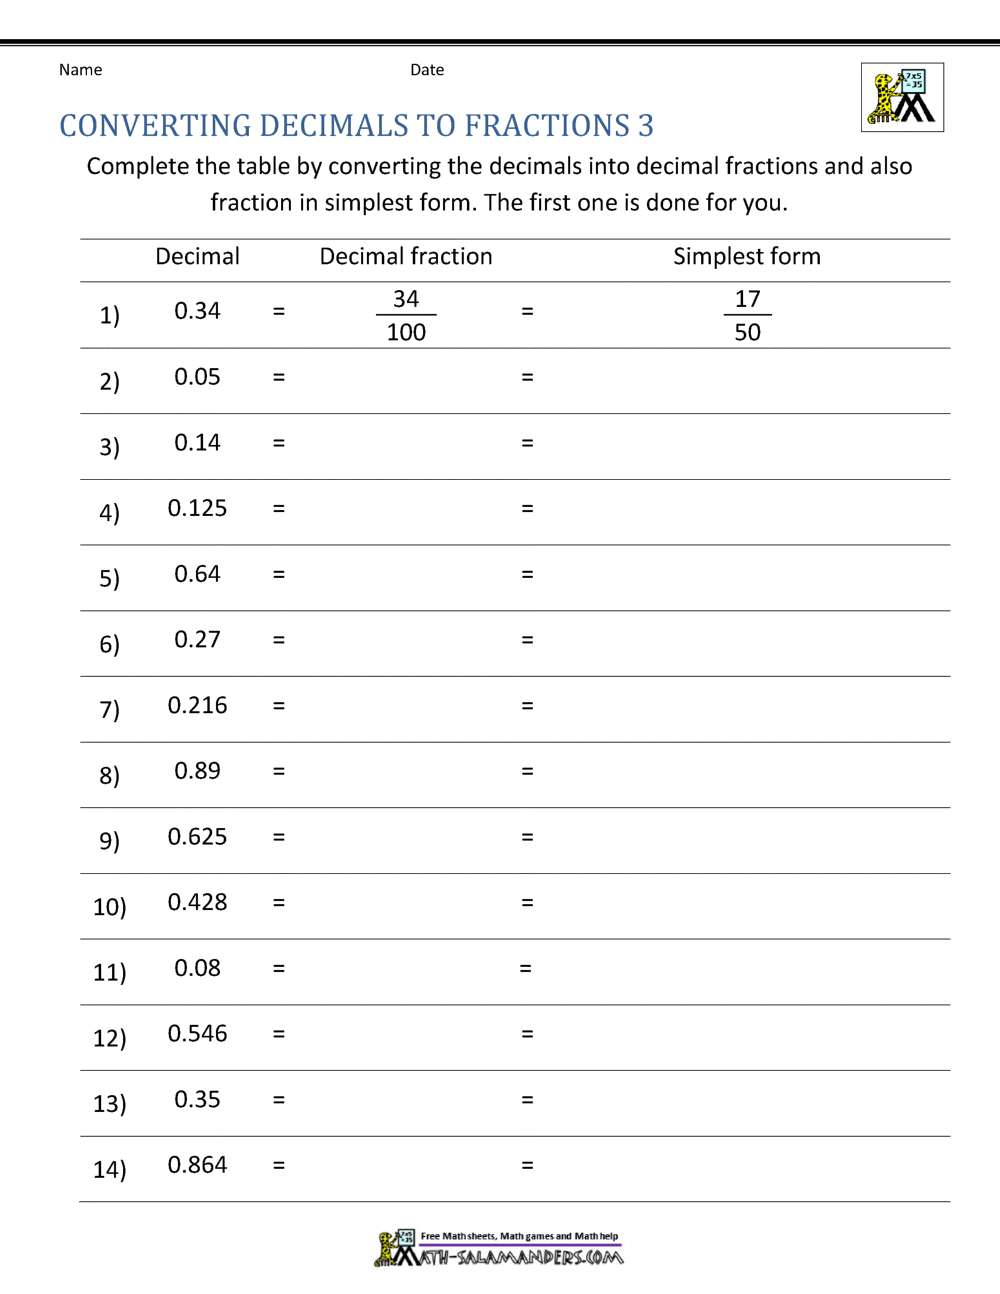 Converting Decimals to Fractions Worksheet Intended For Comparing Fractions And Decimals Worksheet